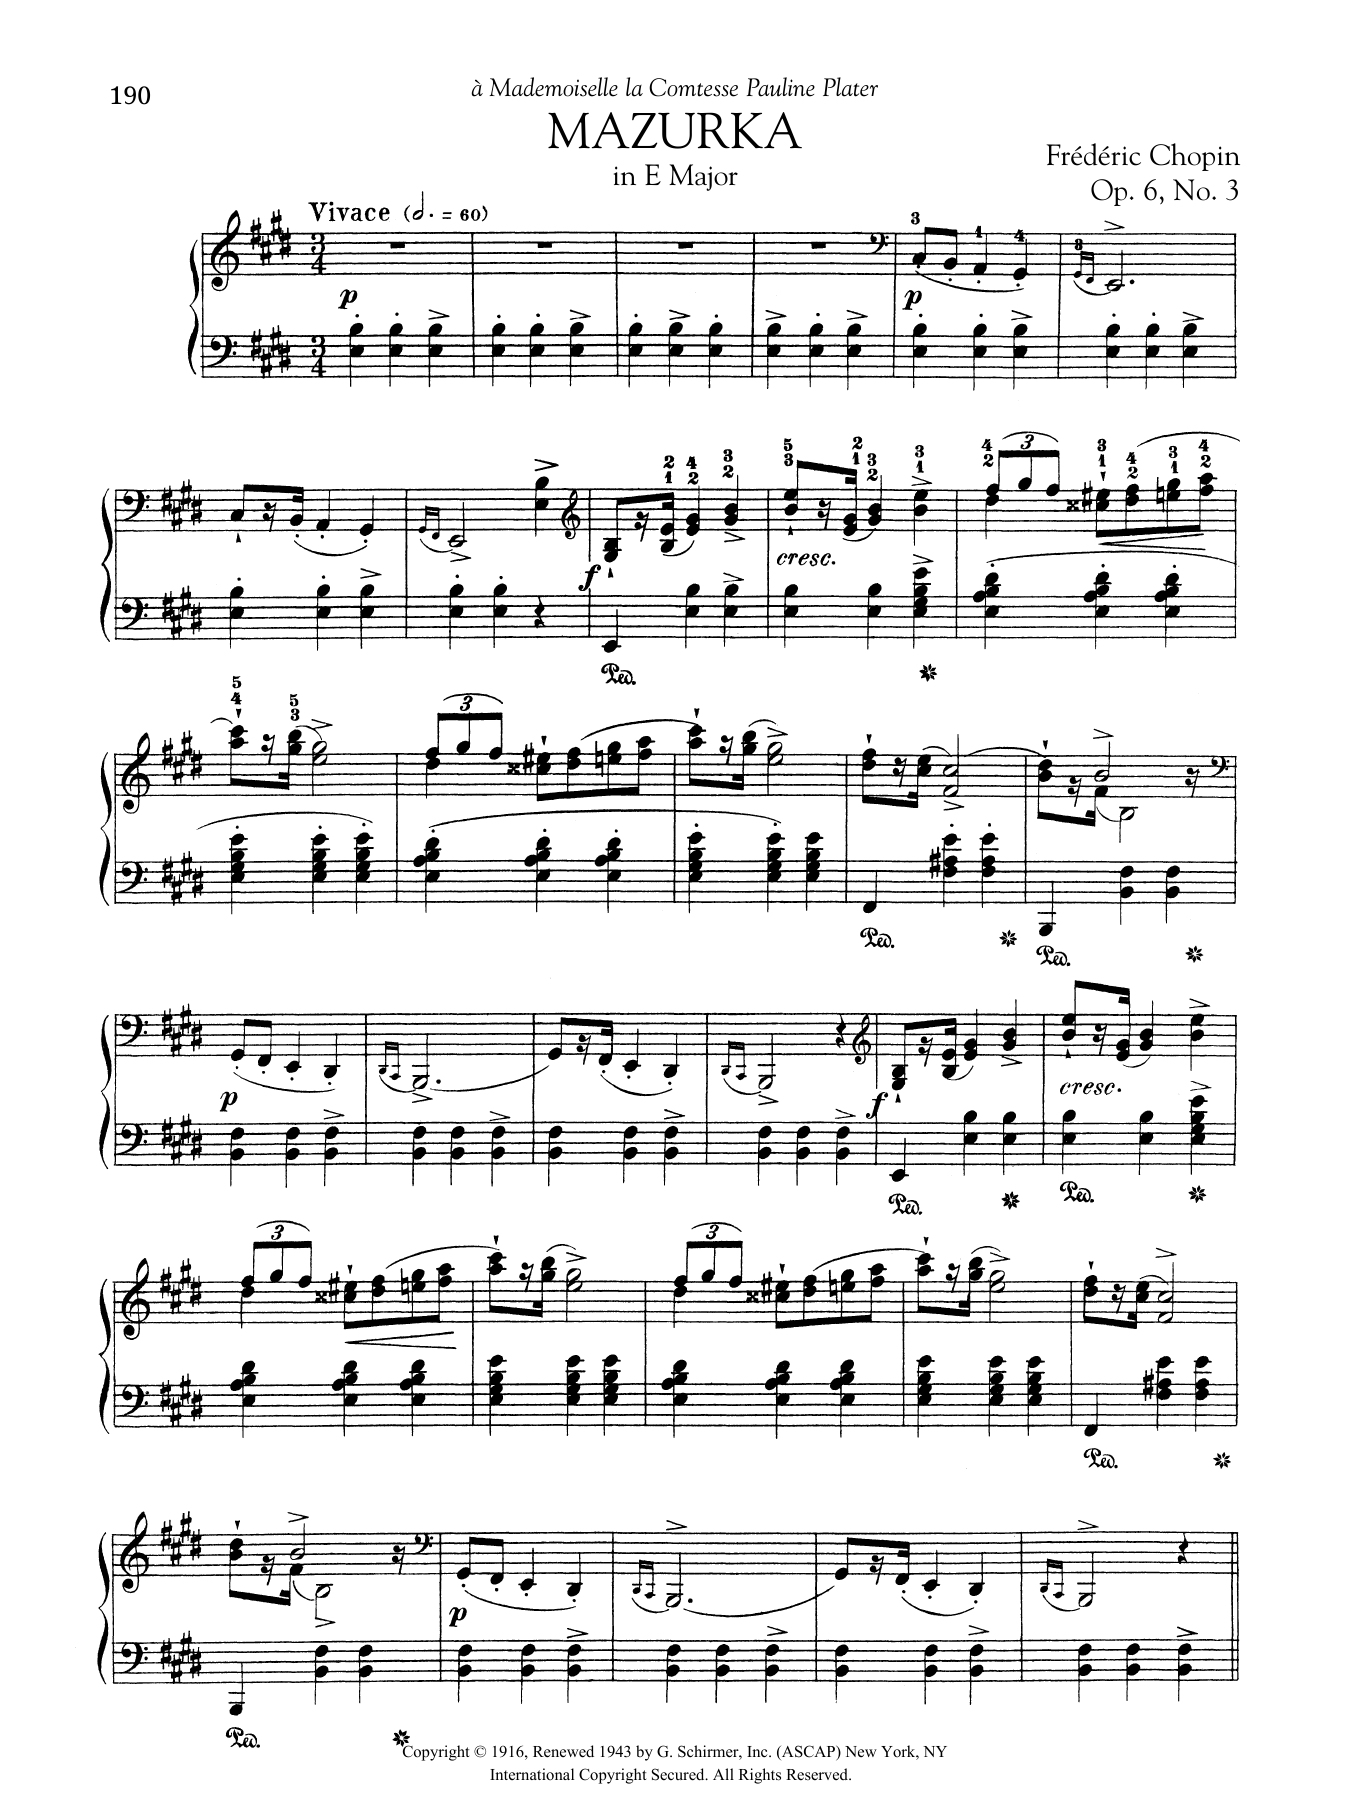 Mazurka in E Major, Op. 6, No. 3 sheet music